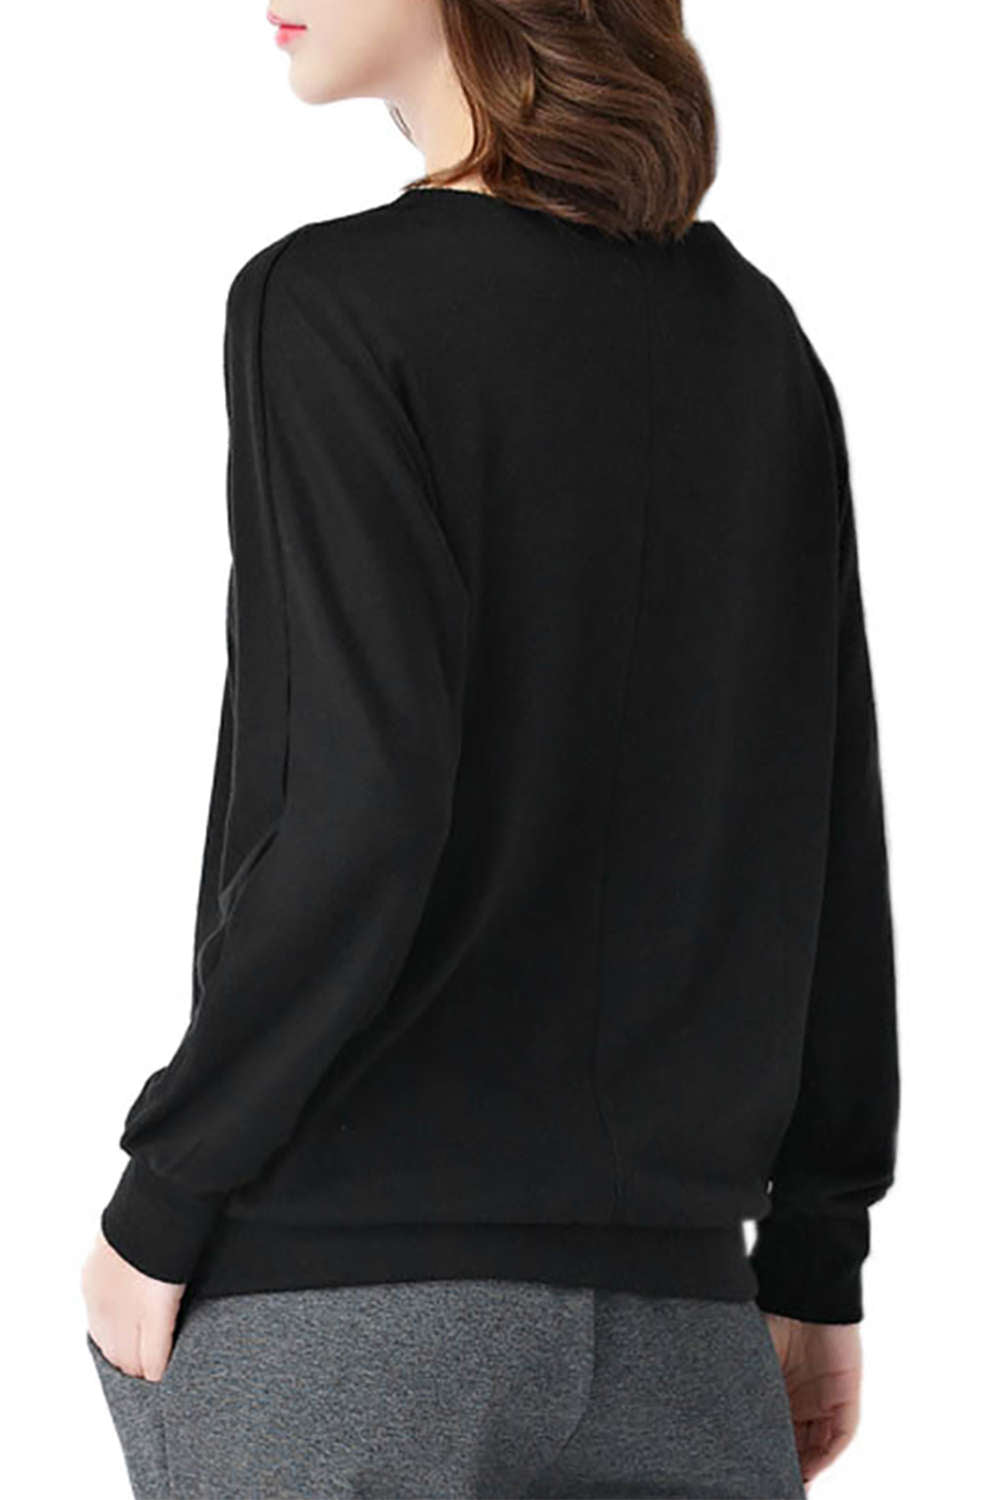 Iyasson Women's Casual Pullover Baggy Sweatshirt